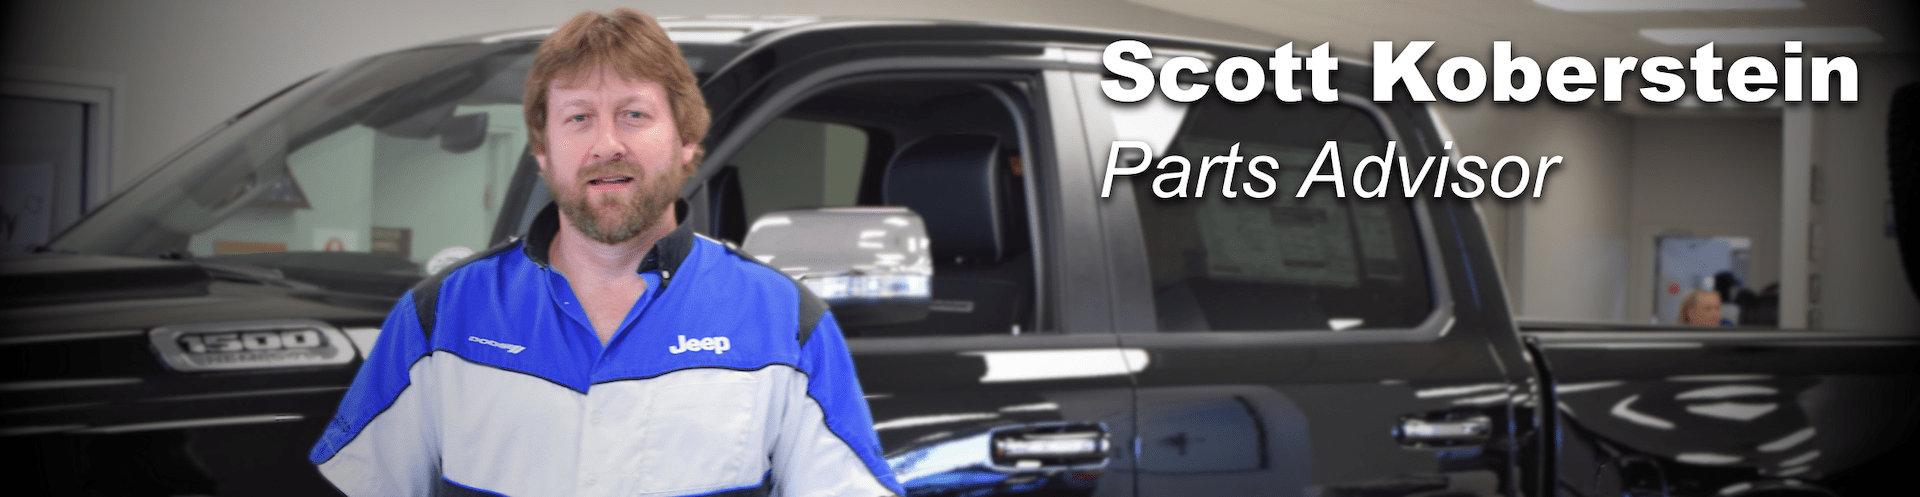 scott koberstein parts advisor prestige chrysler dodge jeep ram